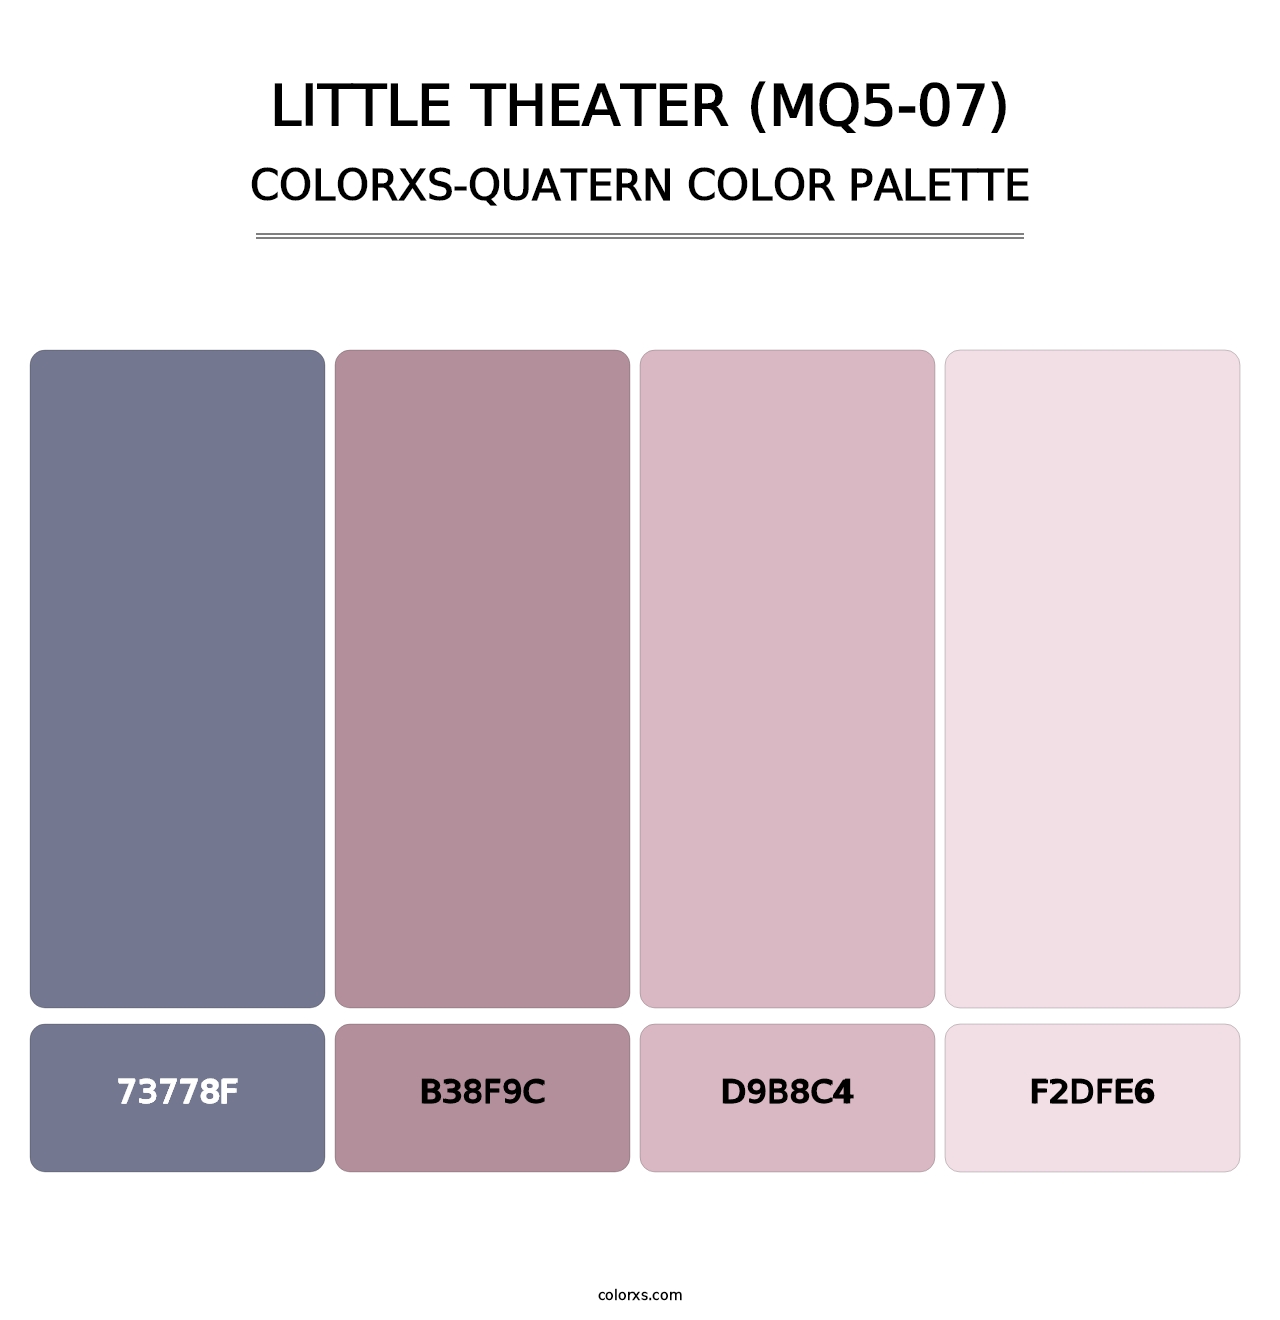 Little Theater (MQ5-07) - Colorxs Quatern Palette